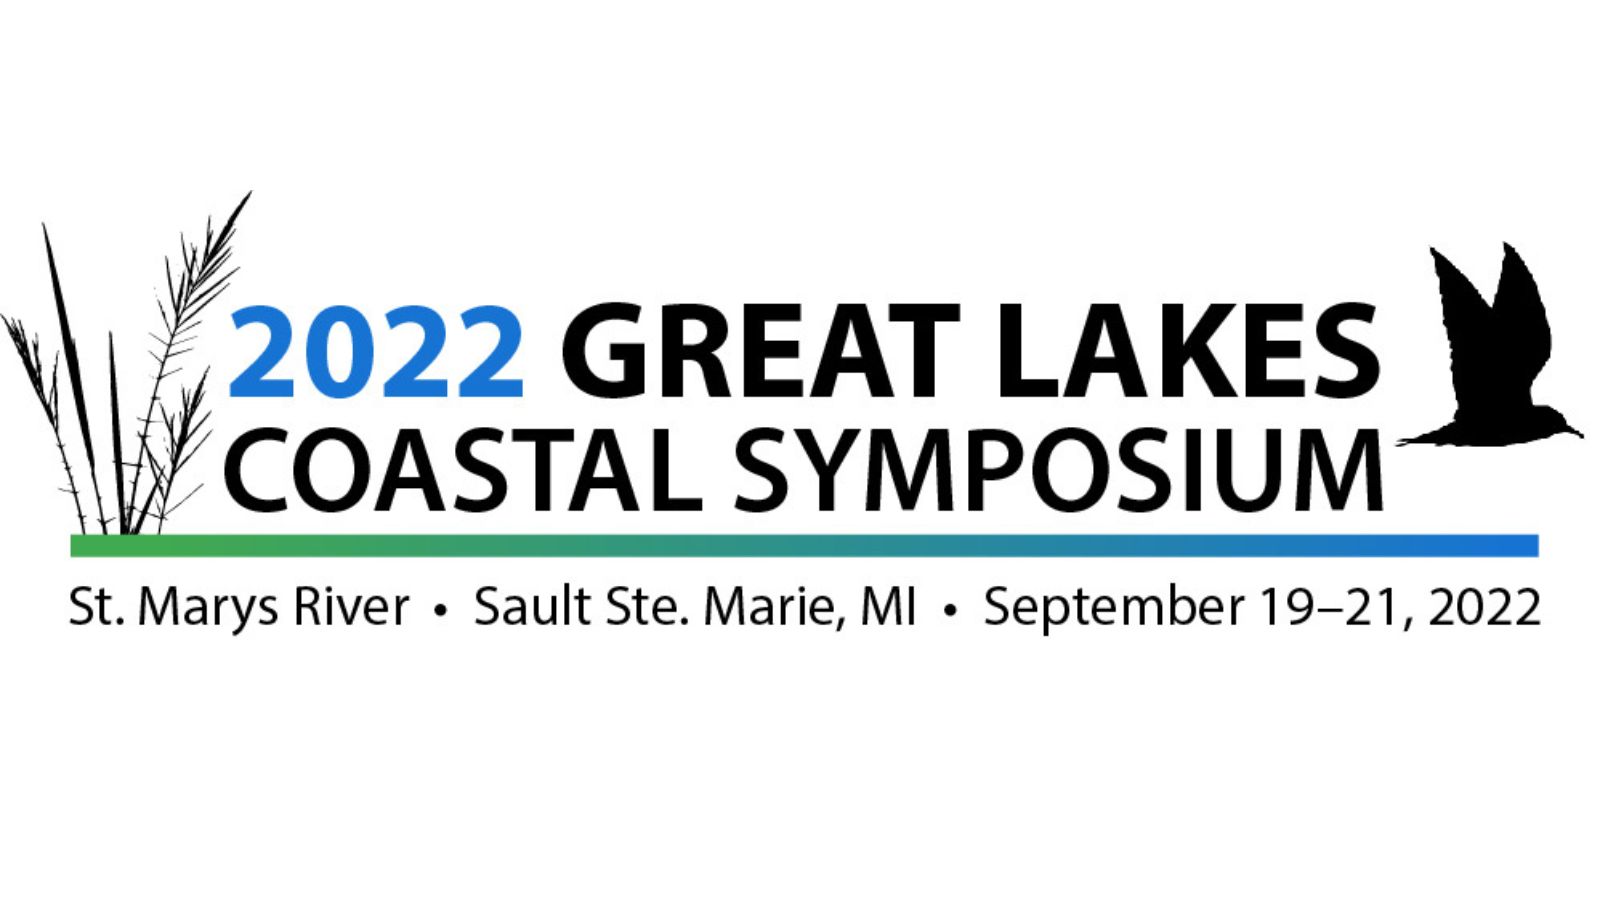 Great lakes costal symposium logo